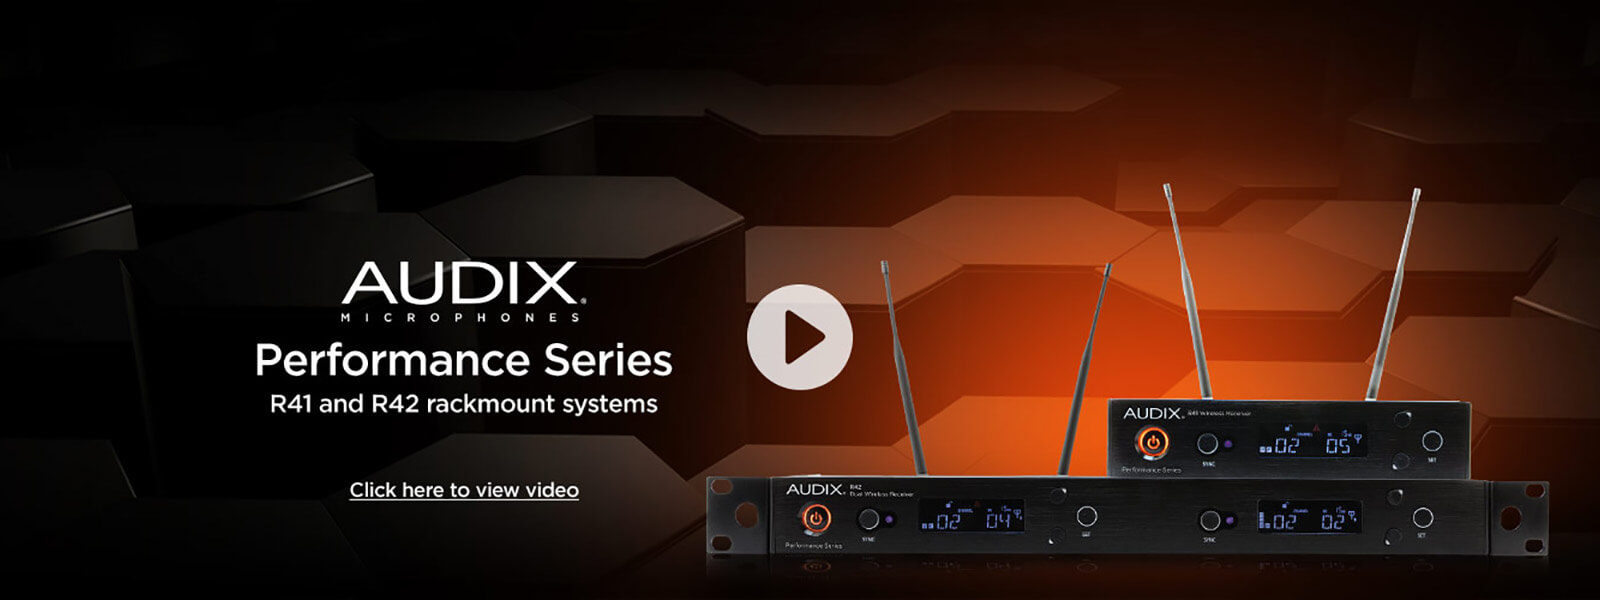 Audix microphones performance series video